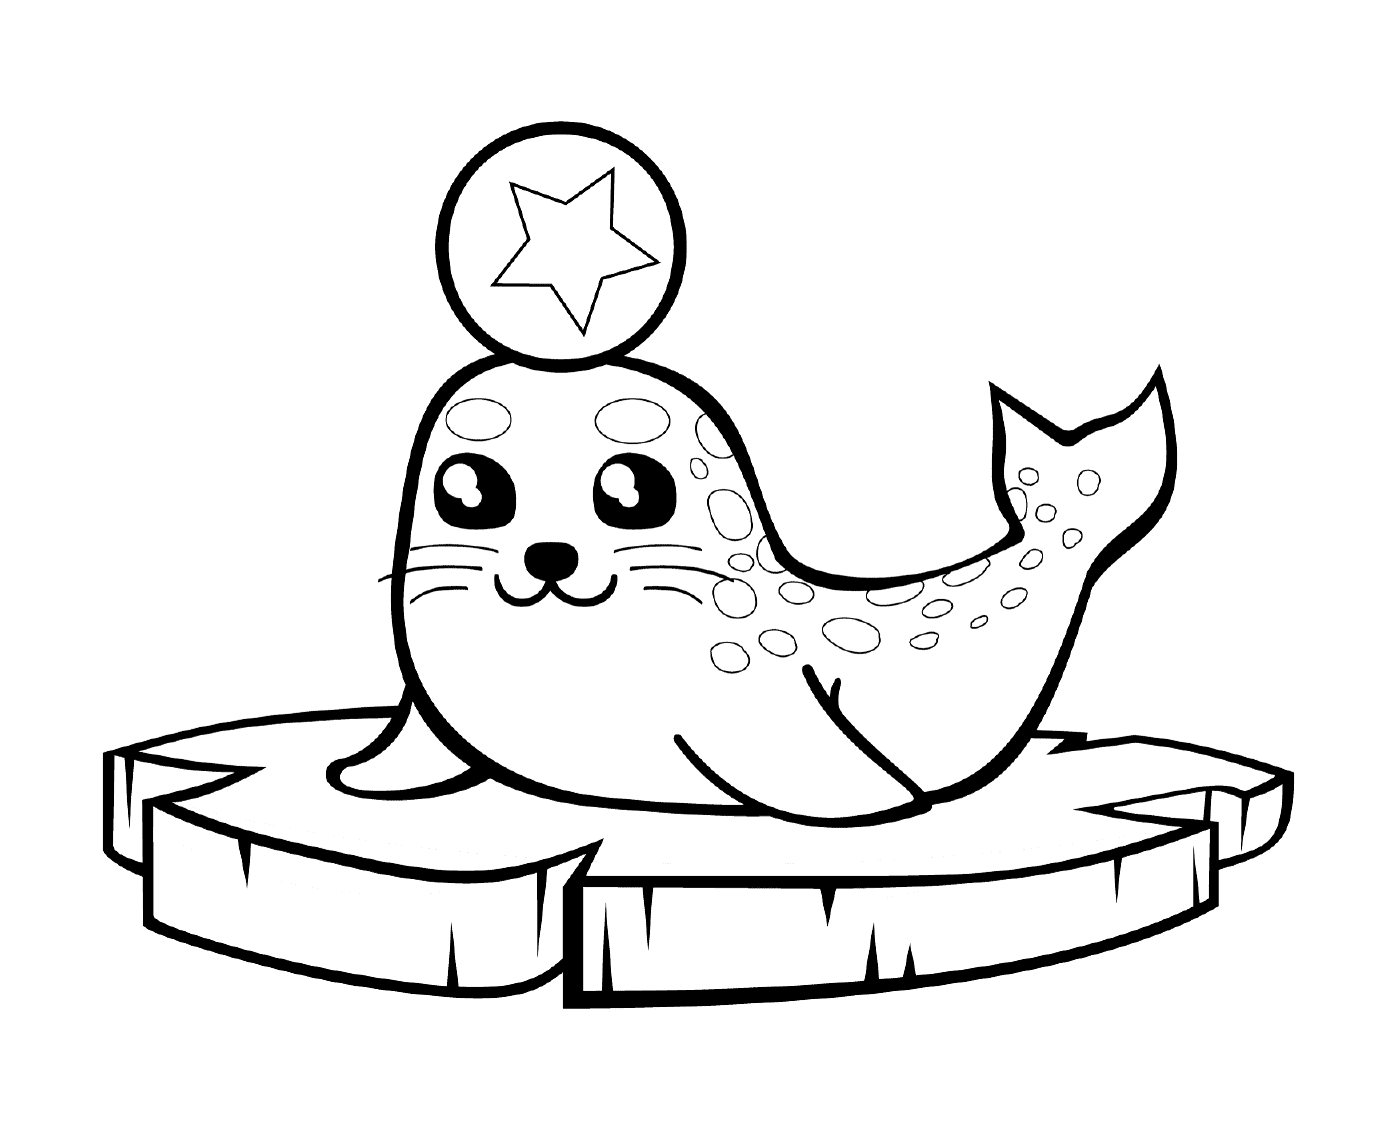  A seal sitting on an iceberg 